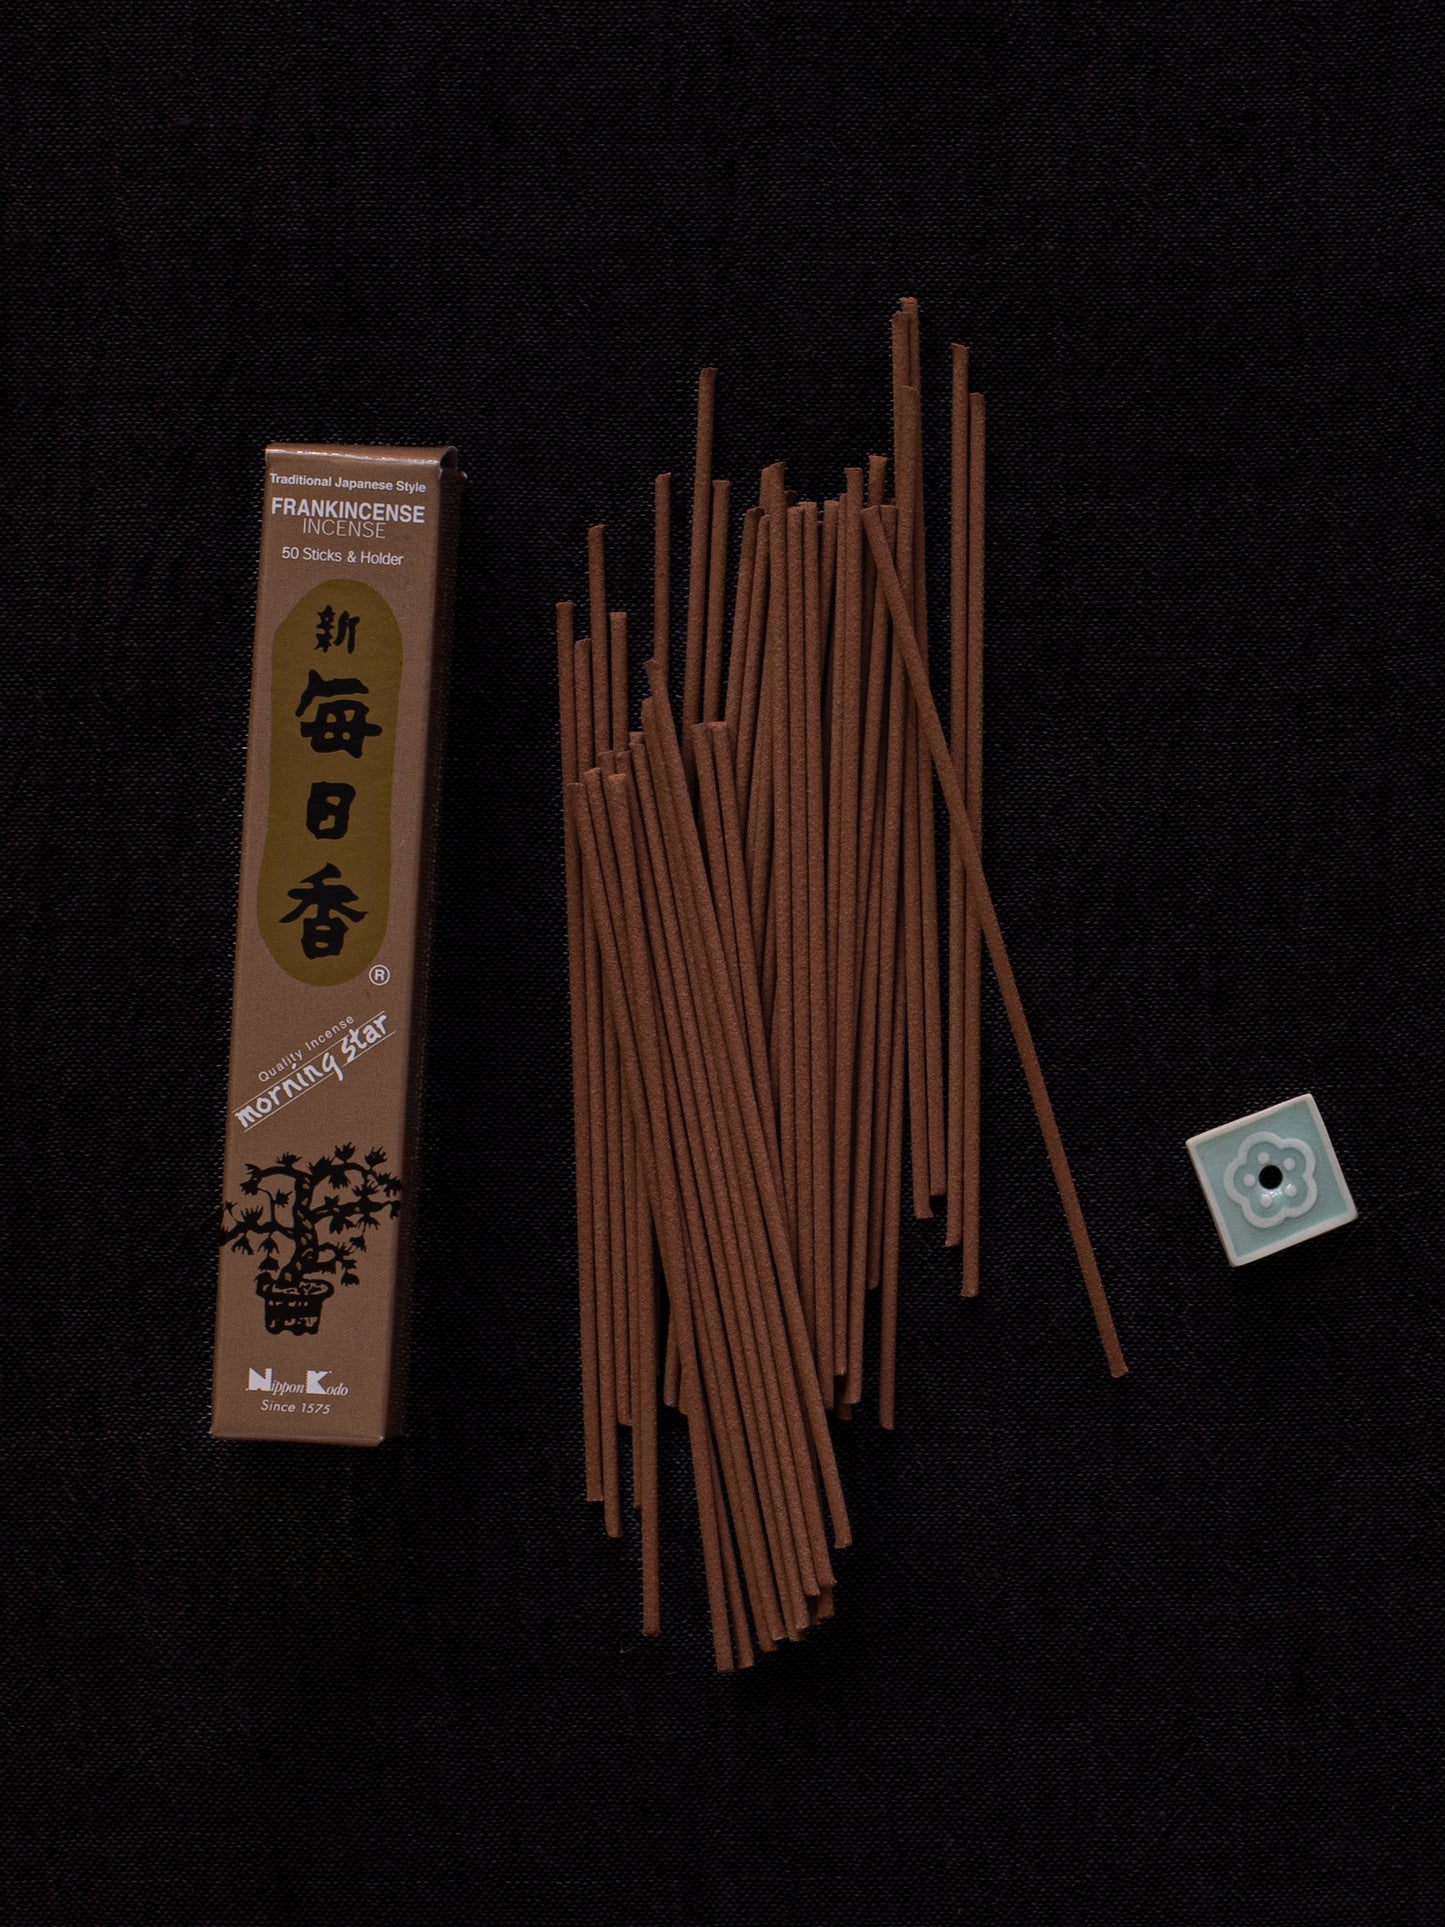 Morning Star Incense - Frankincense